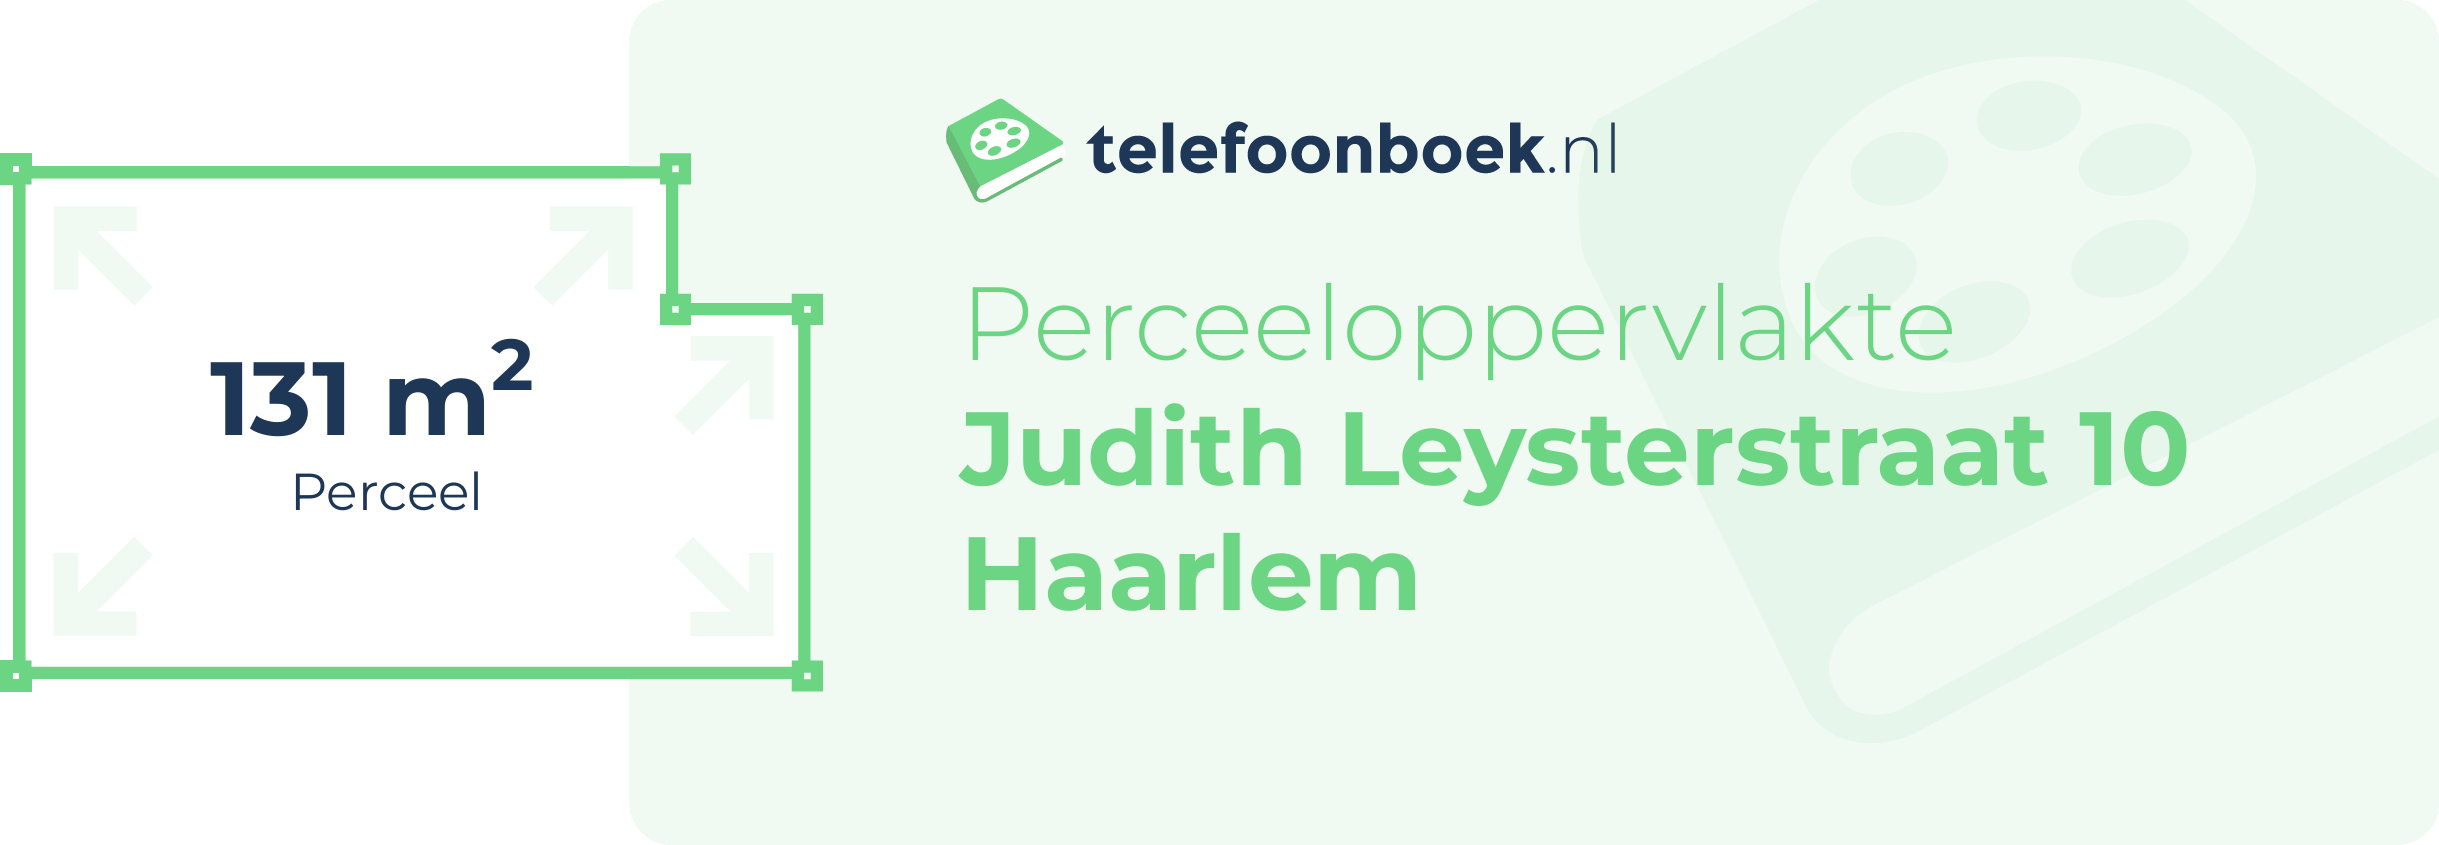 Perceeloppervlakte Judith Leysterstraat 10 Haarlem